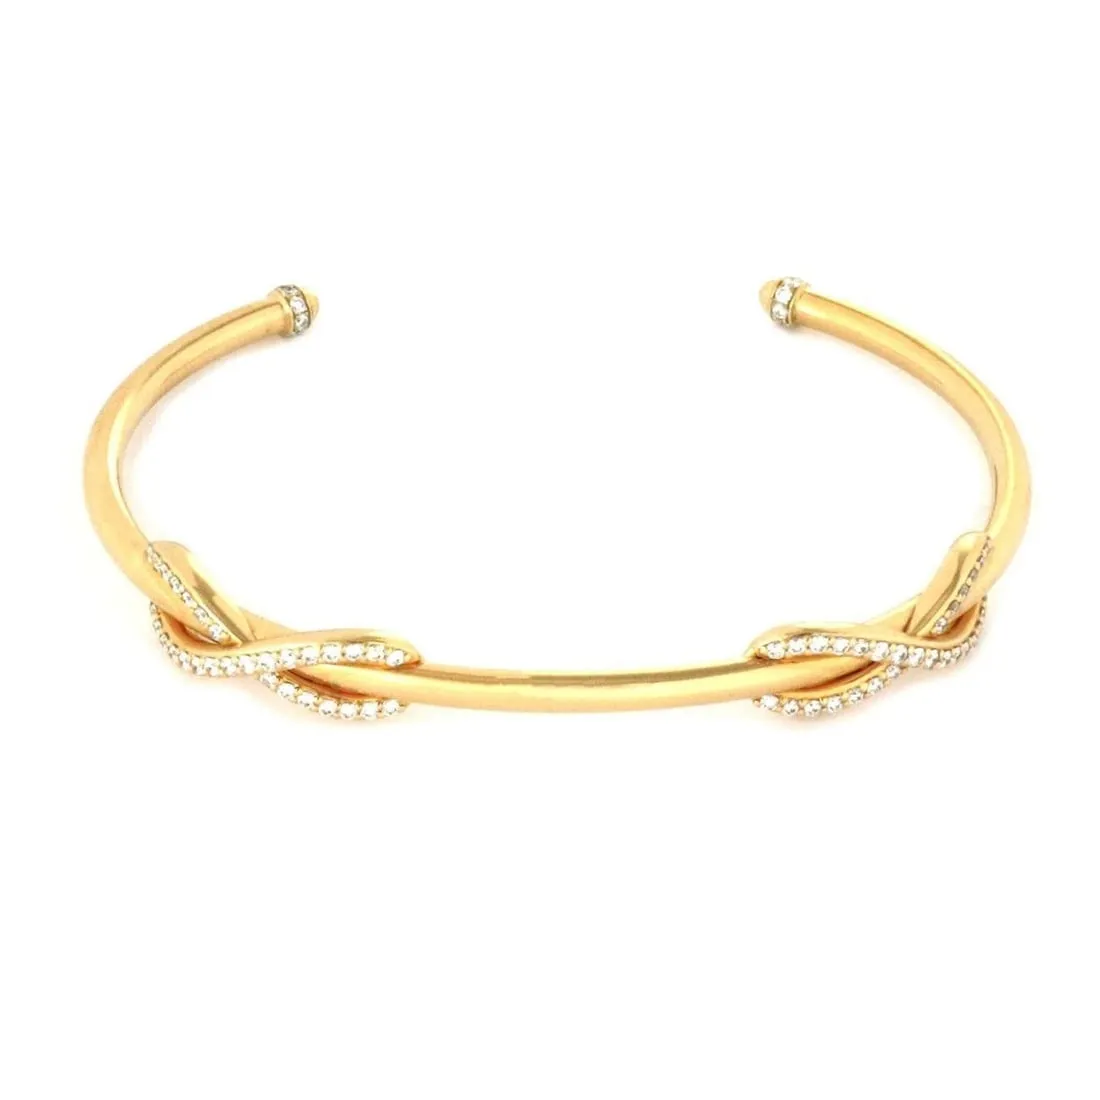 Jasper52 presents The Gold Standard: Designer Jewelry Feb. 20